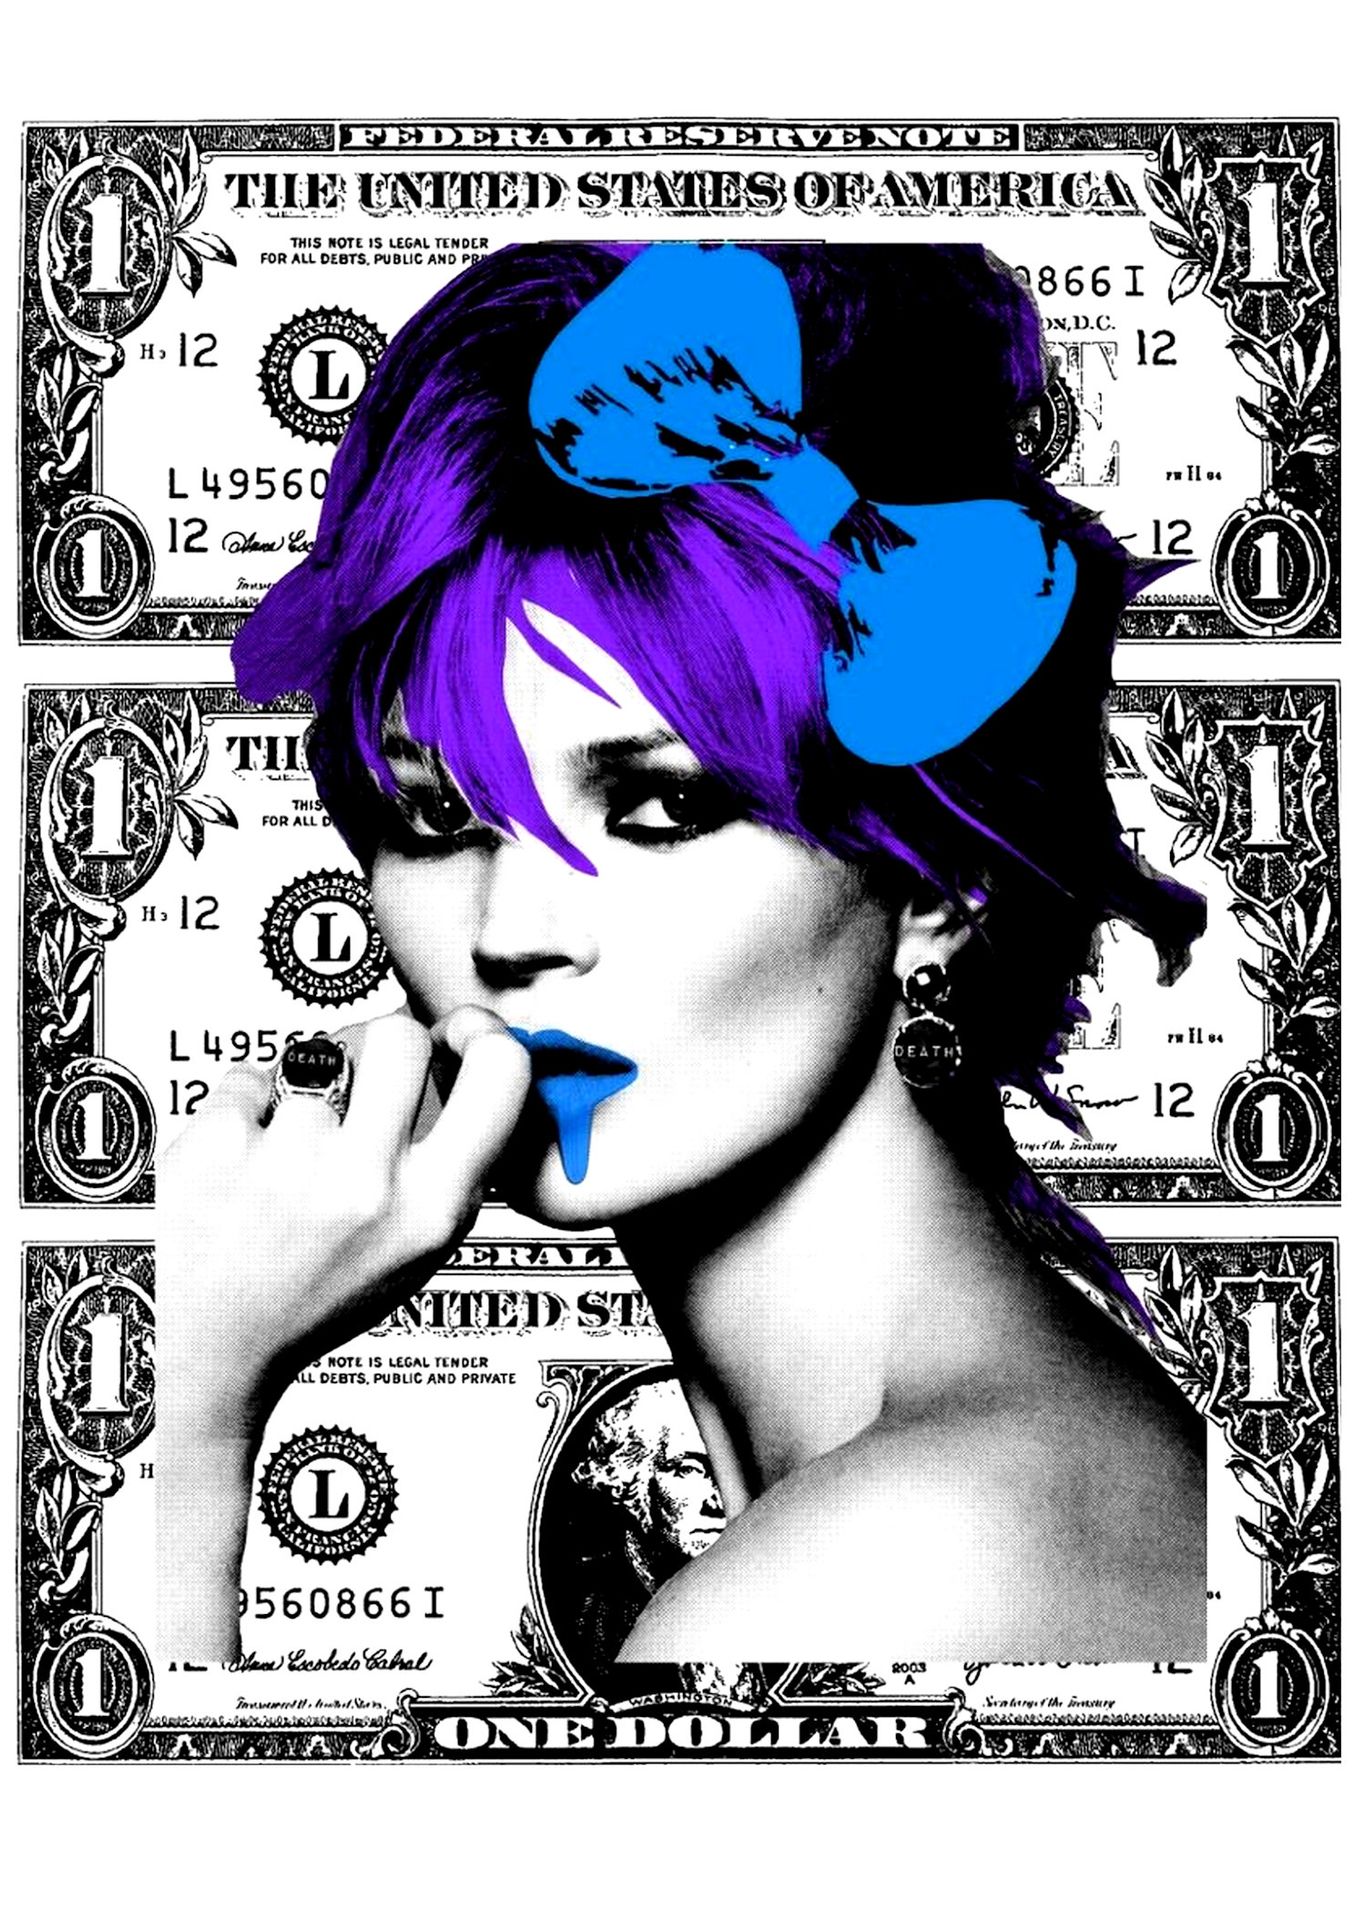 Death NYC 纽约市的死亡

凯特-莫斯 $ 紫色, 2015

丝网印刷。

限量发行100张印刷品。

尺寸：45 x 32 cm - 艺术纸300g&hellip;